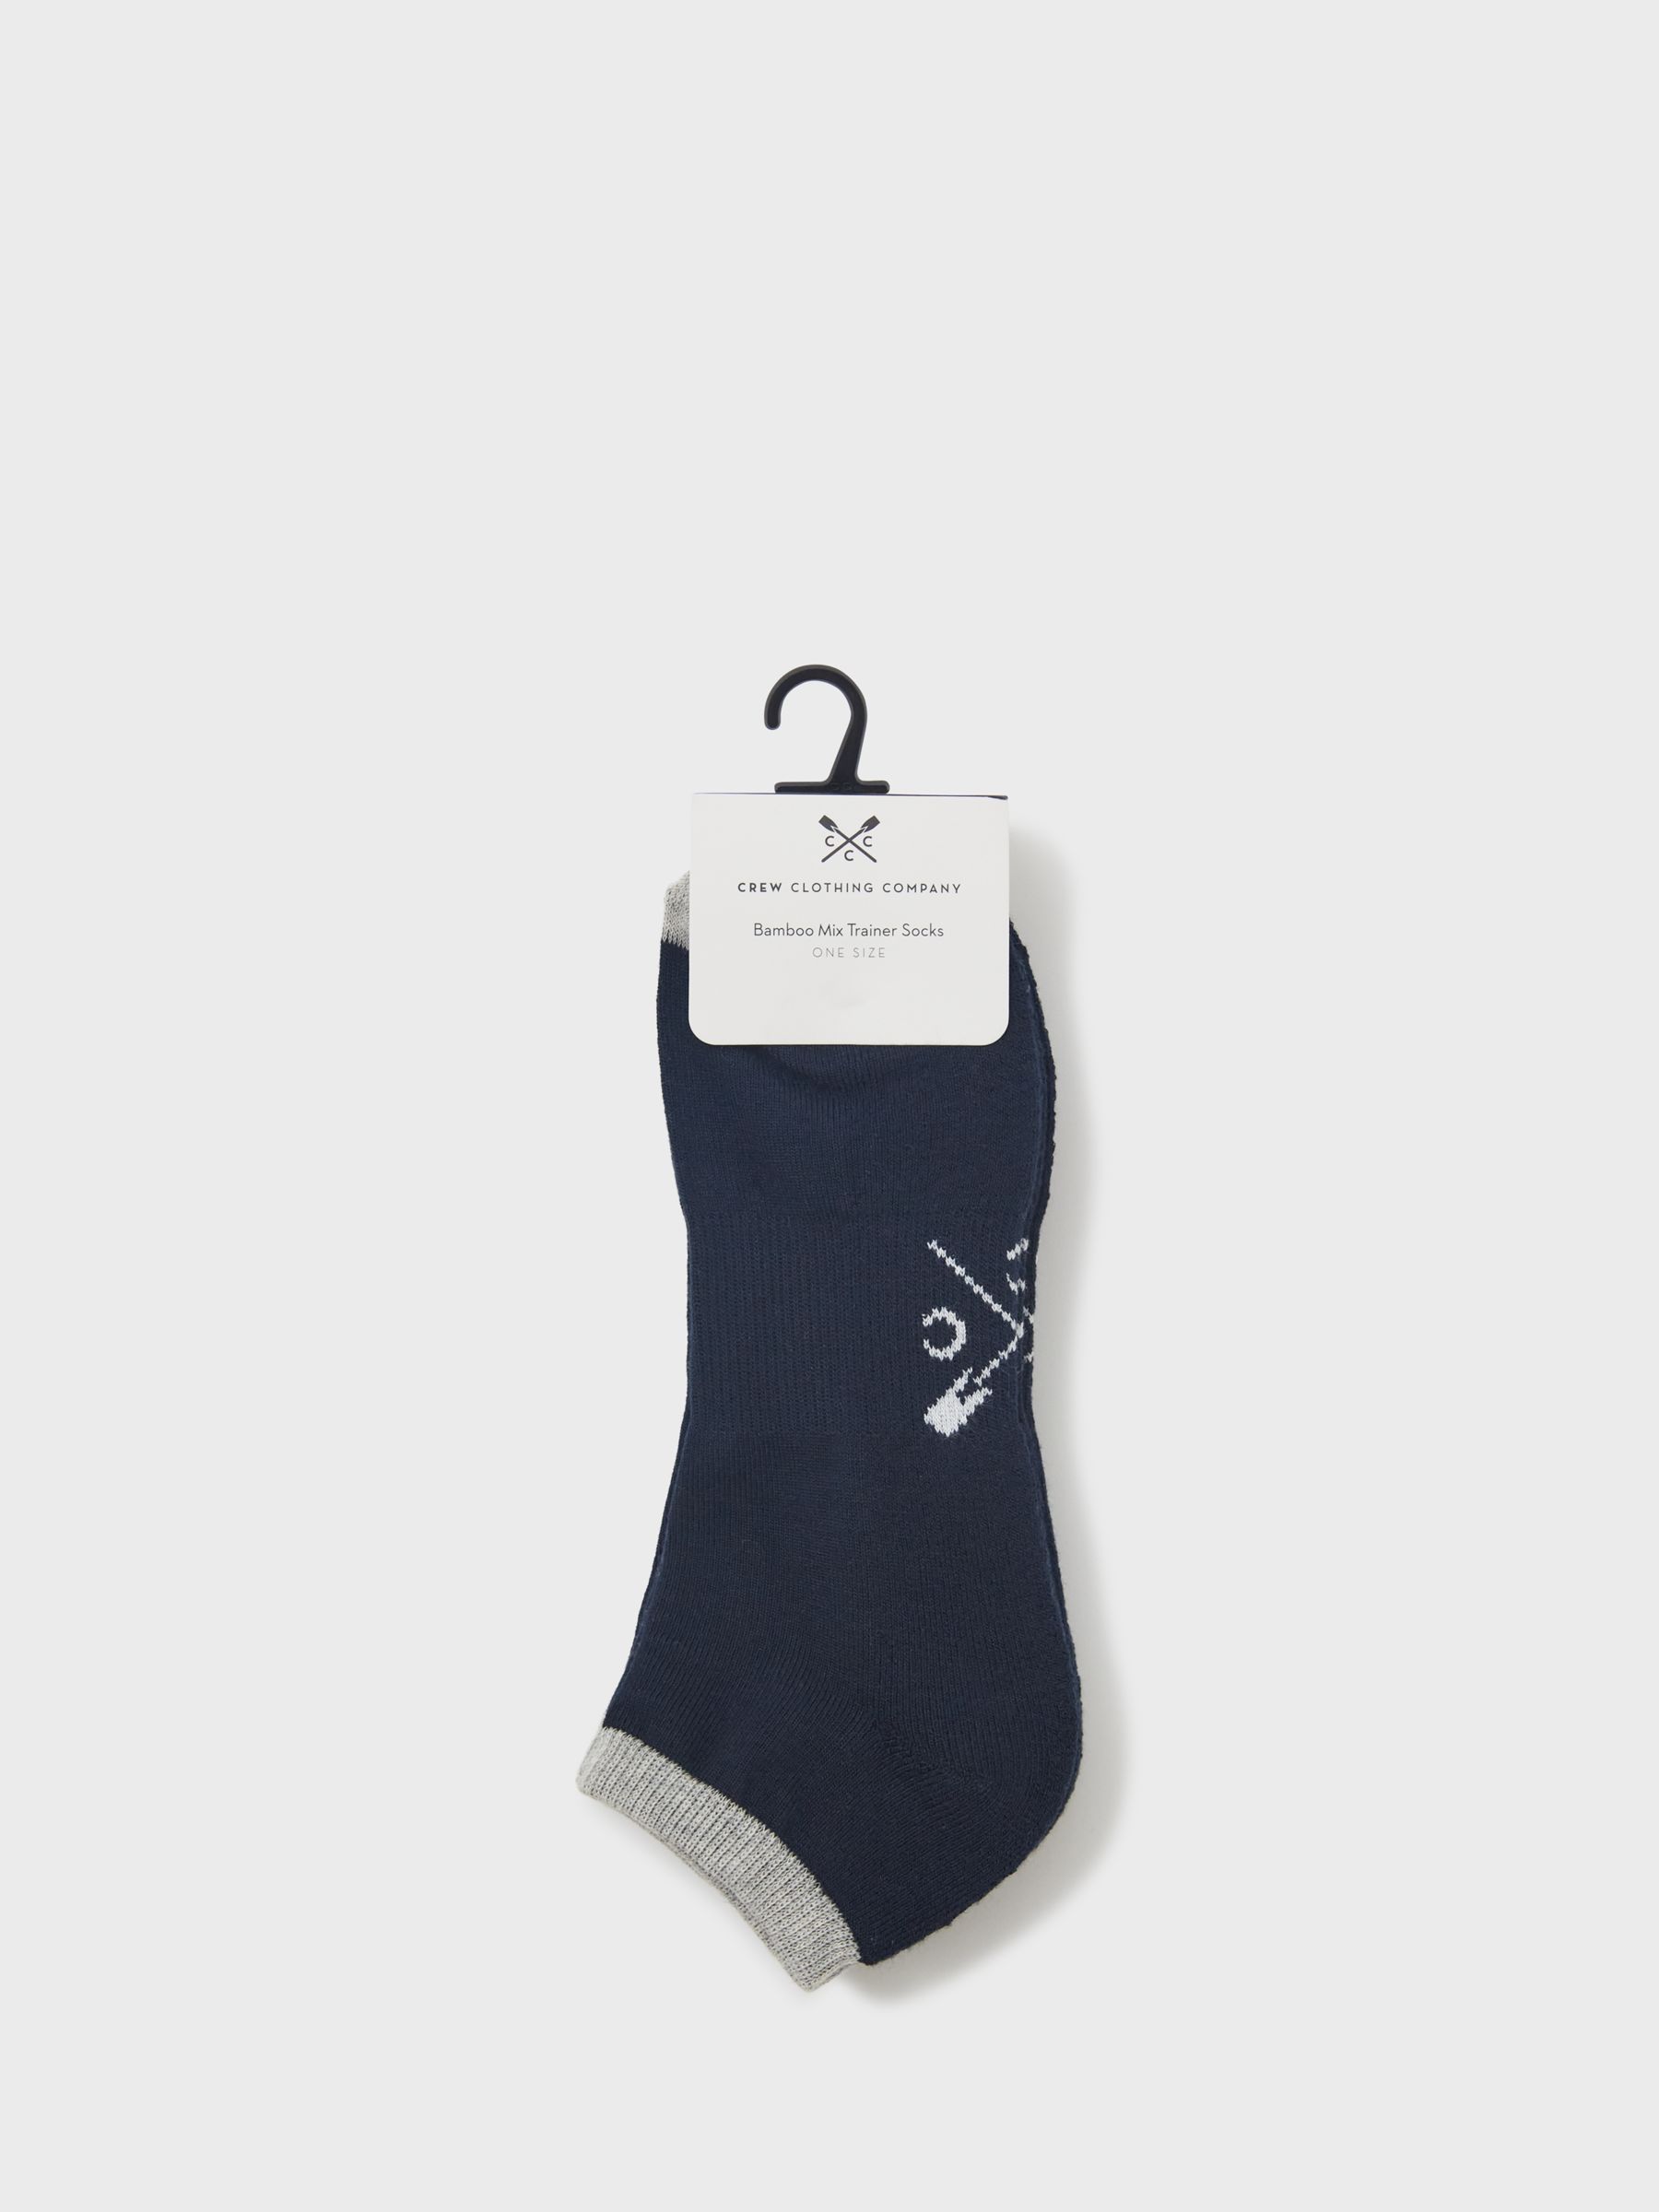 Buy Crew Clothing Bamboo Blend Ankle Socks, Pack of 3, Dark Blue Online at johnlewis.com